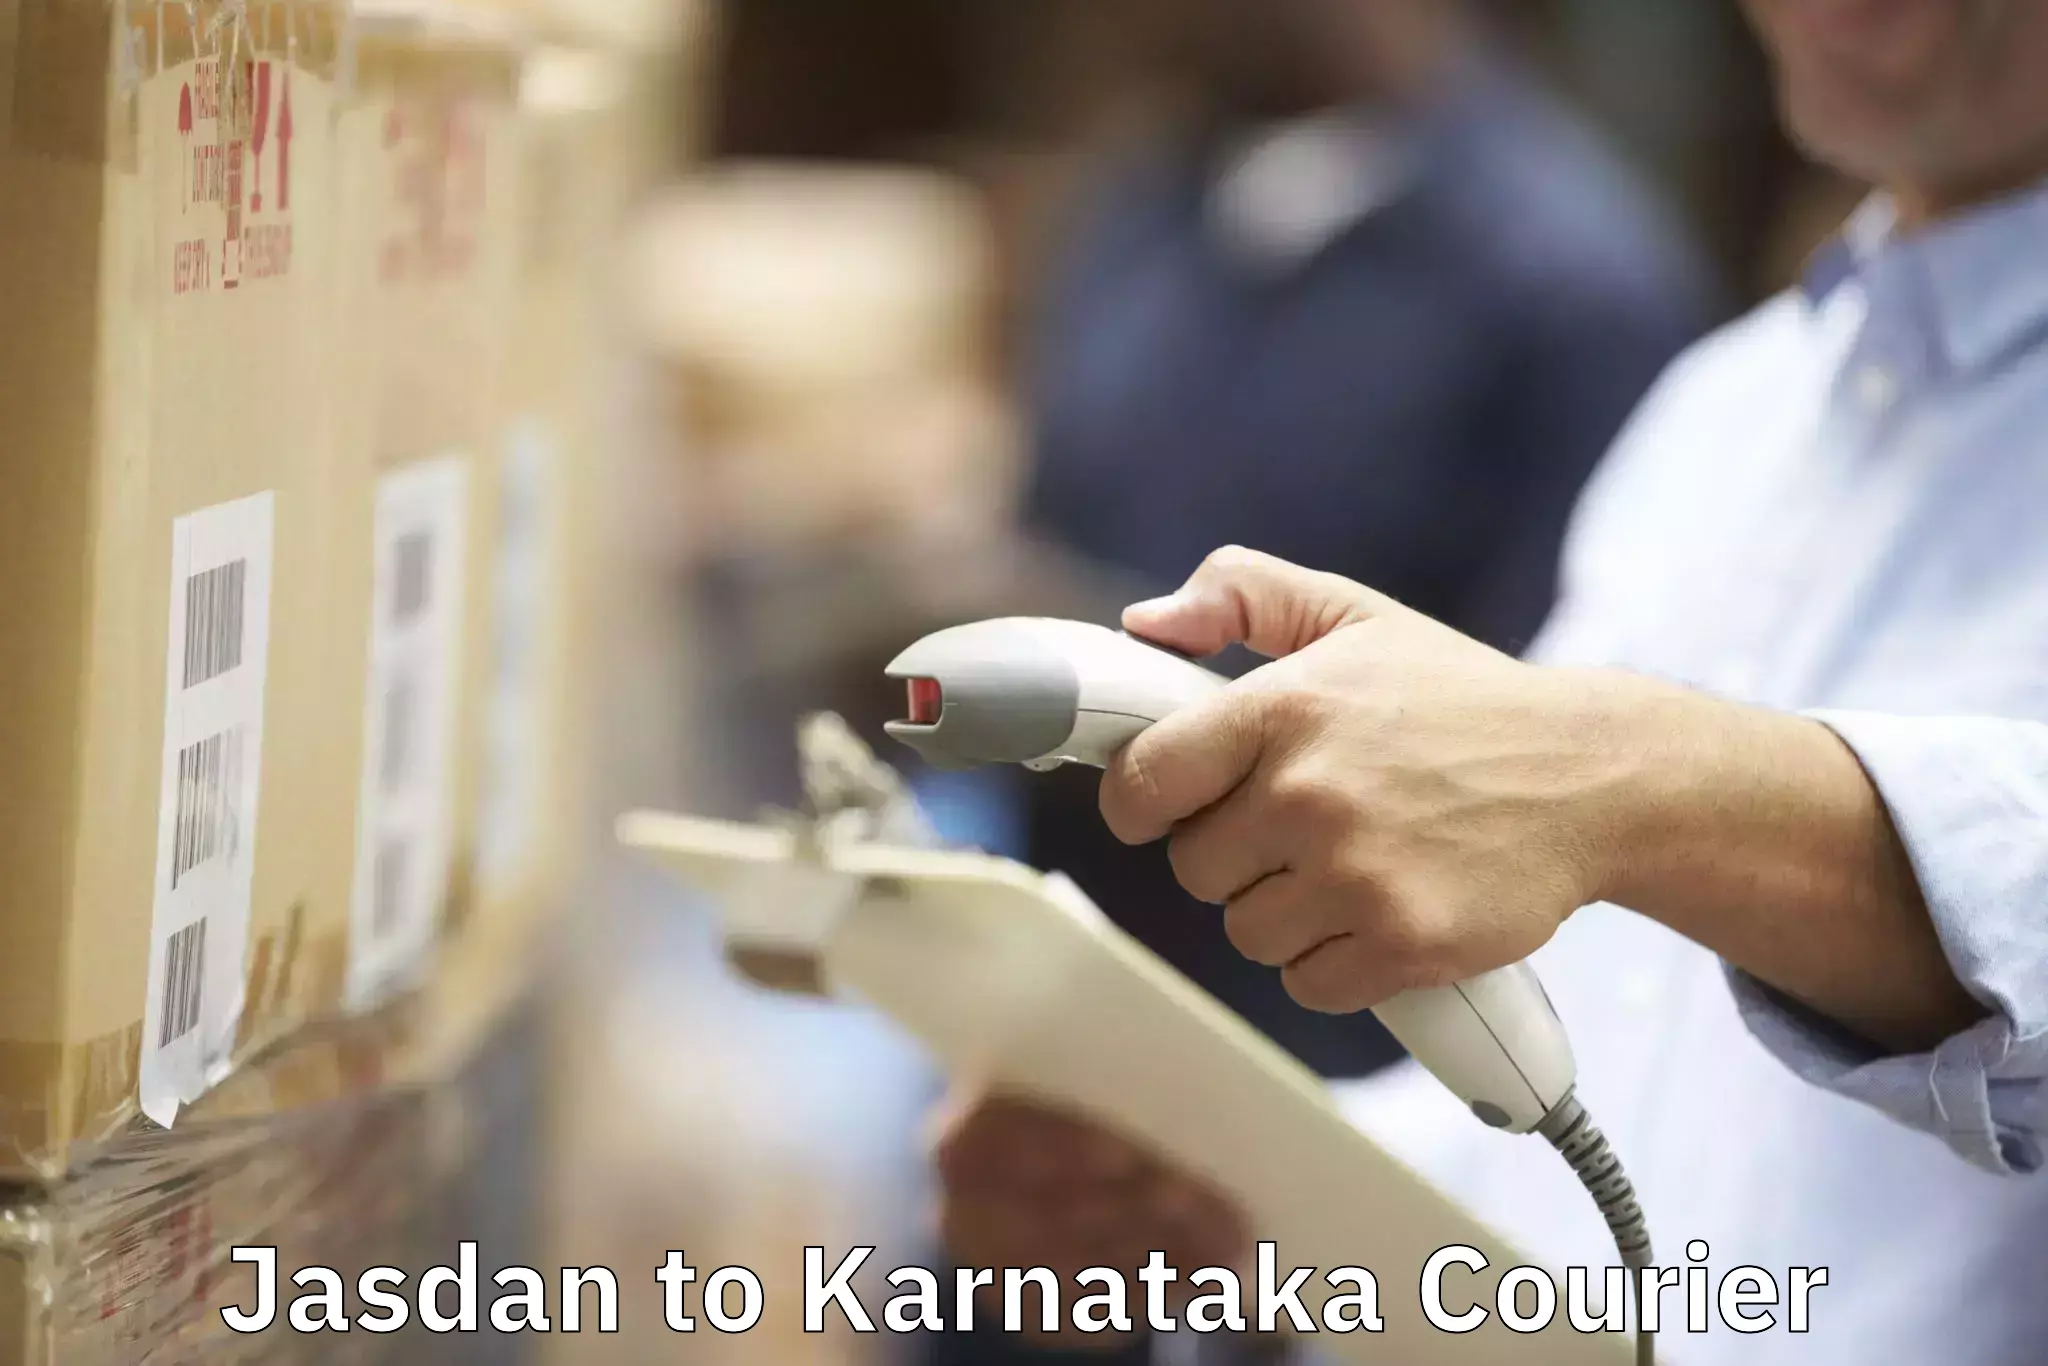 Home goods moving company Jasdan to Karnataka